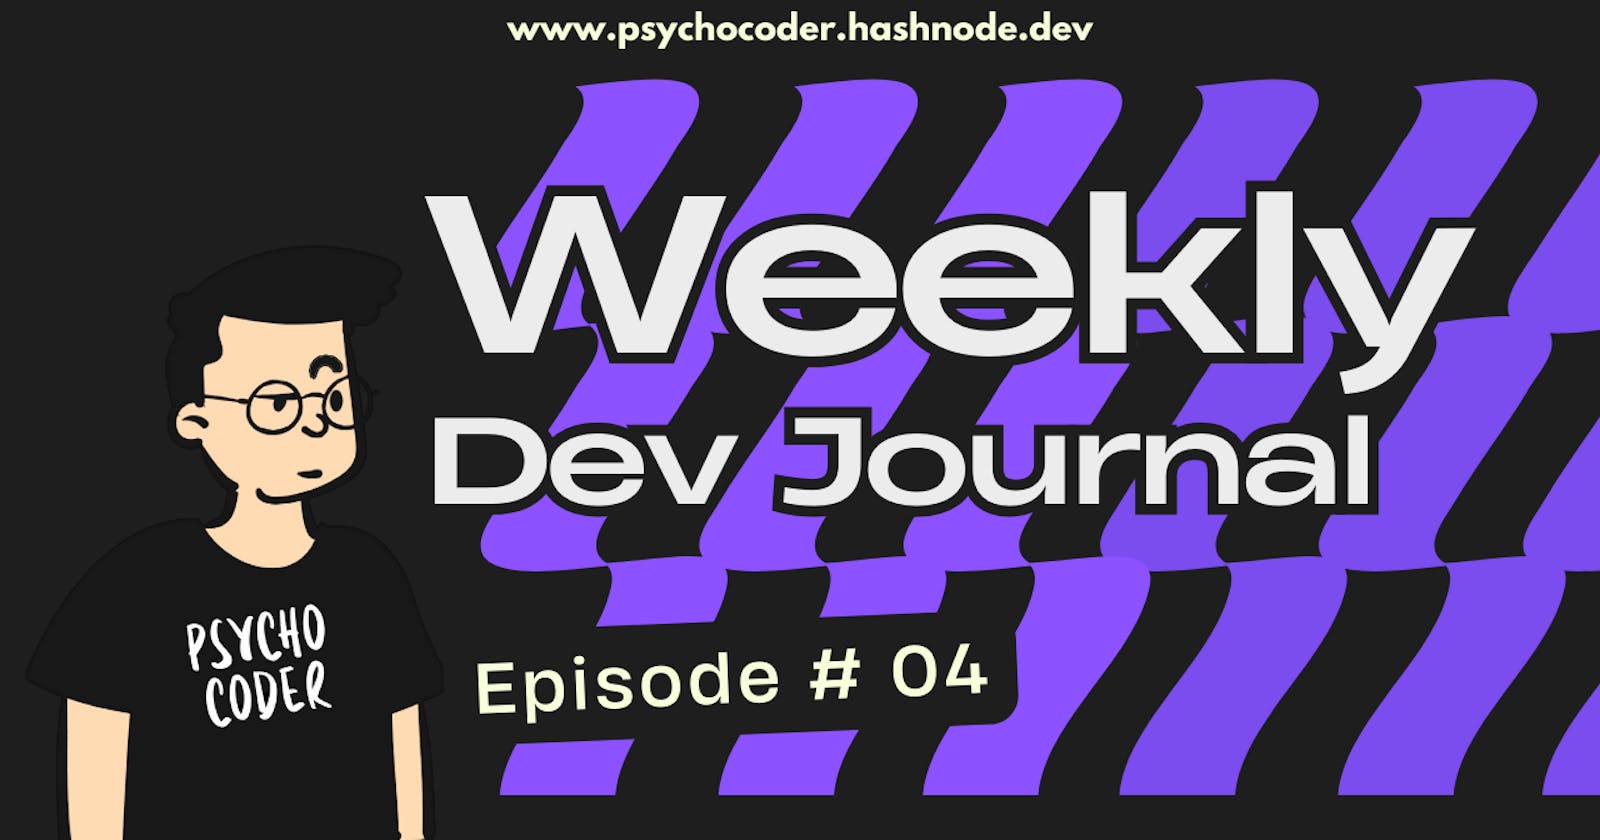 Weekly Dev Journal - Episode # 04